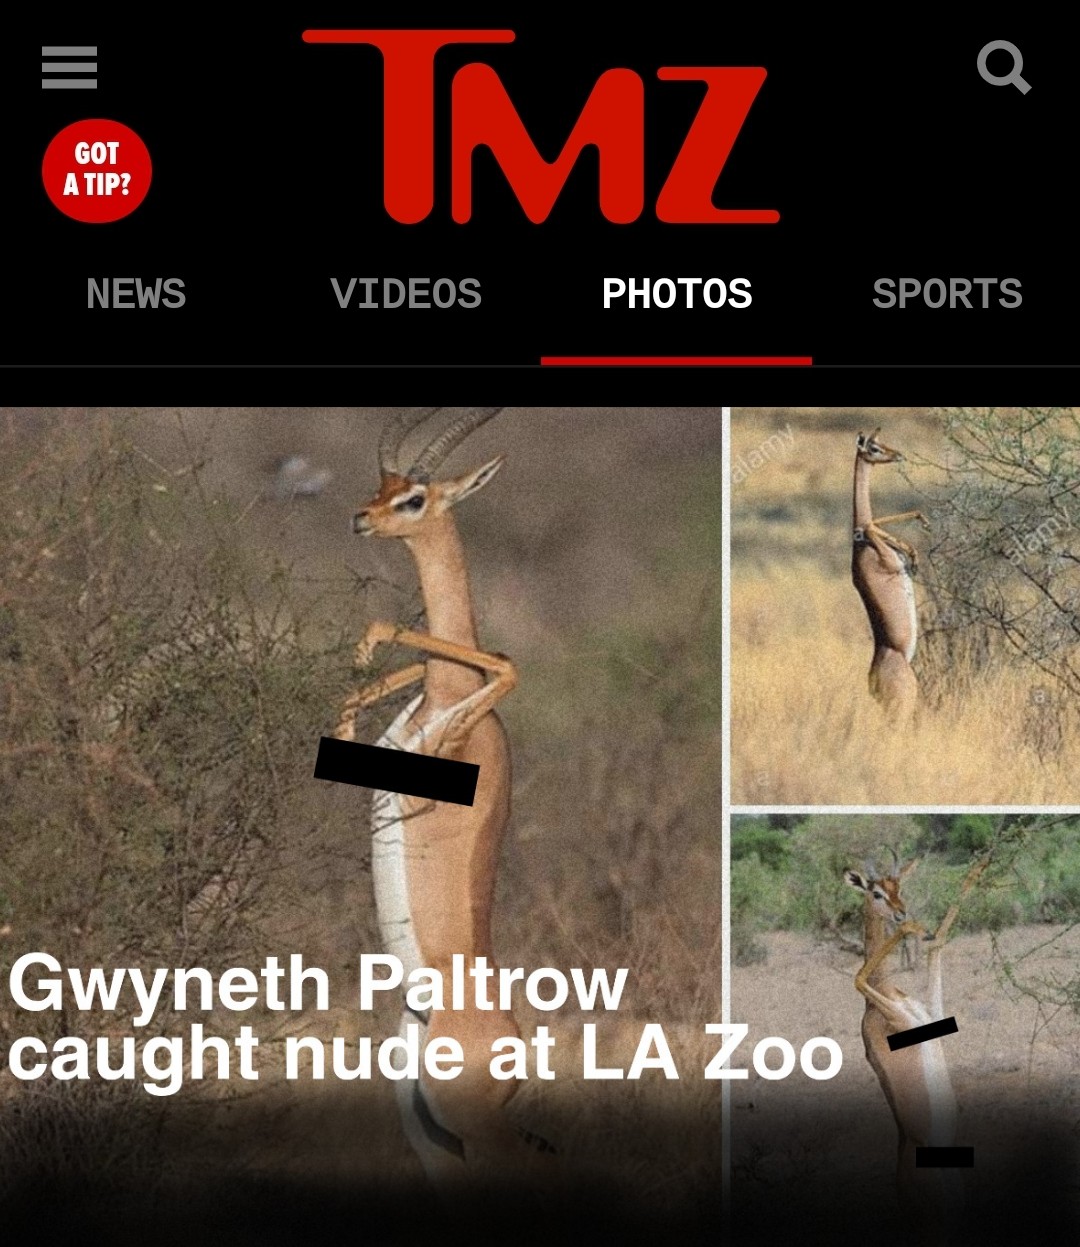 cool pics and memes - fauna - Got A Tip? News Www Tmz Videos Photos alamy Gwyneth Paltrow caught nude at La Zoo Q Sports alamy